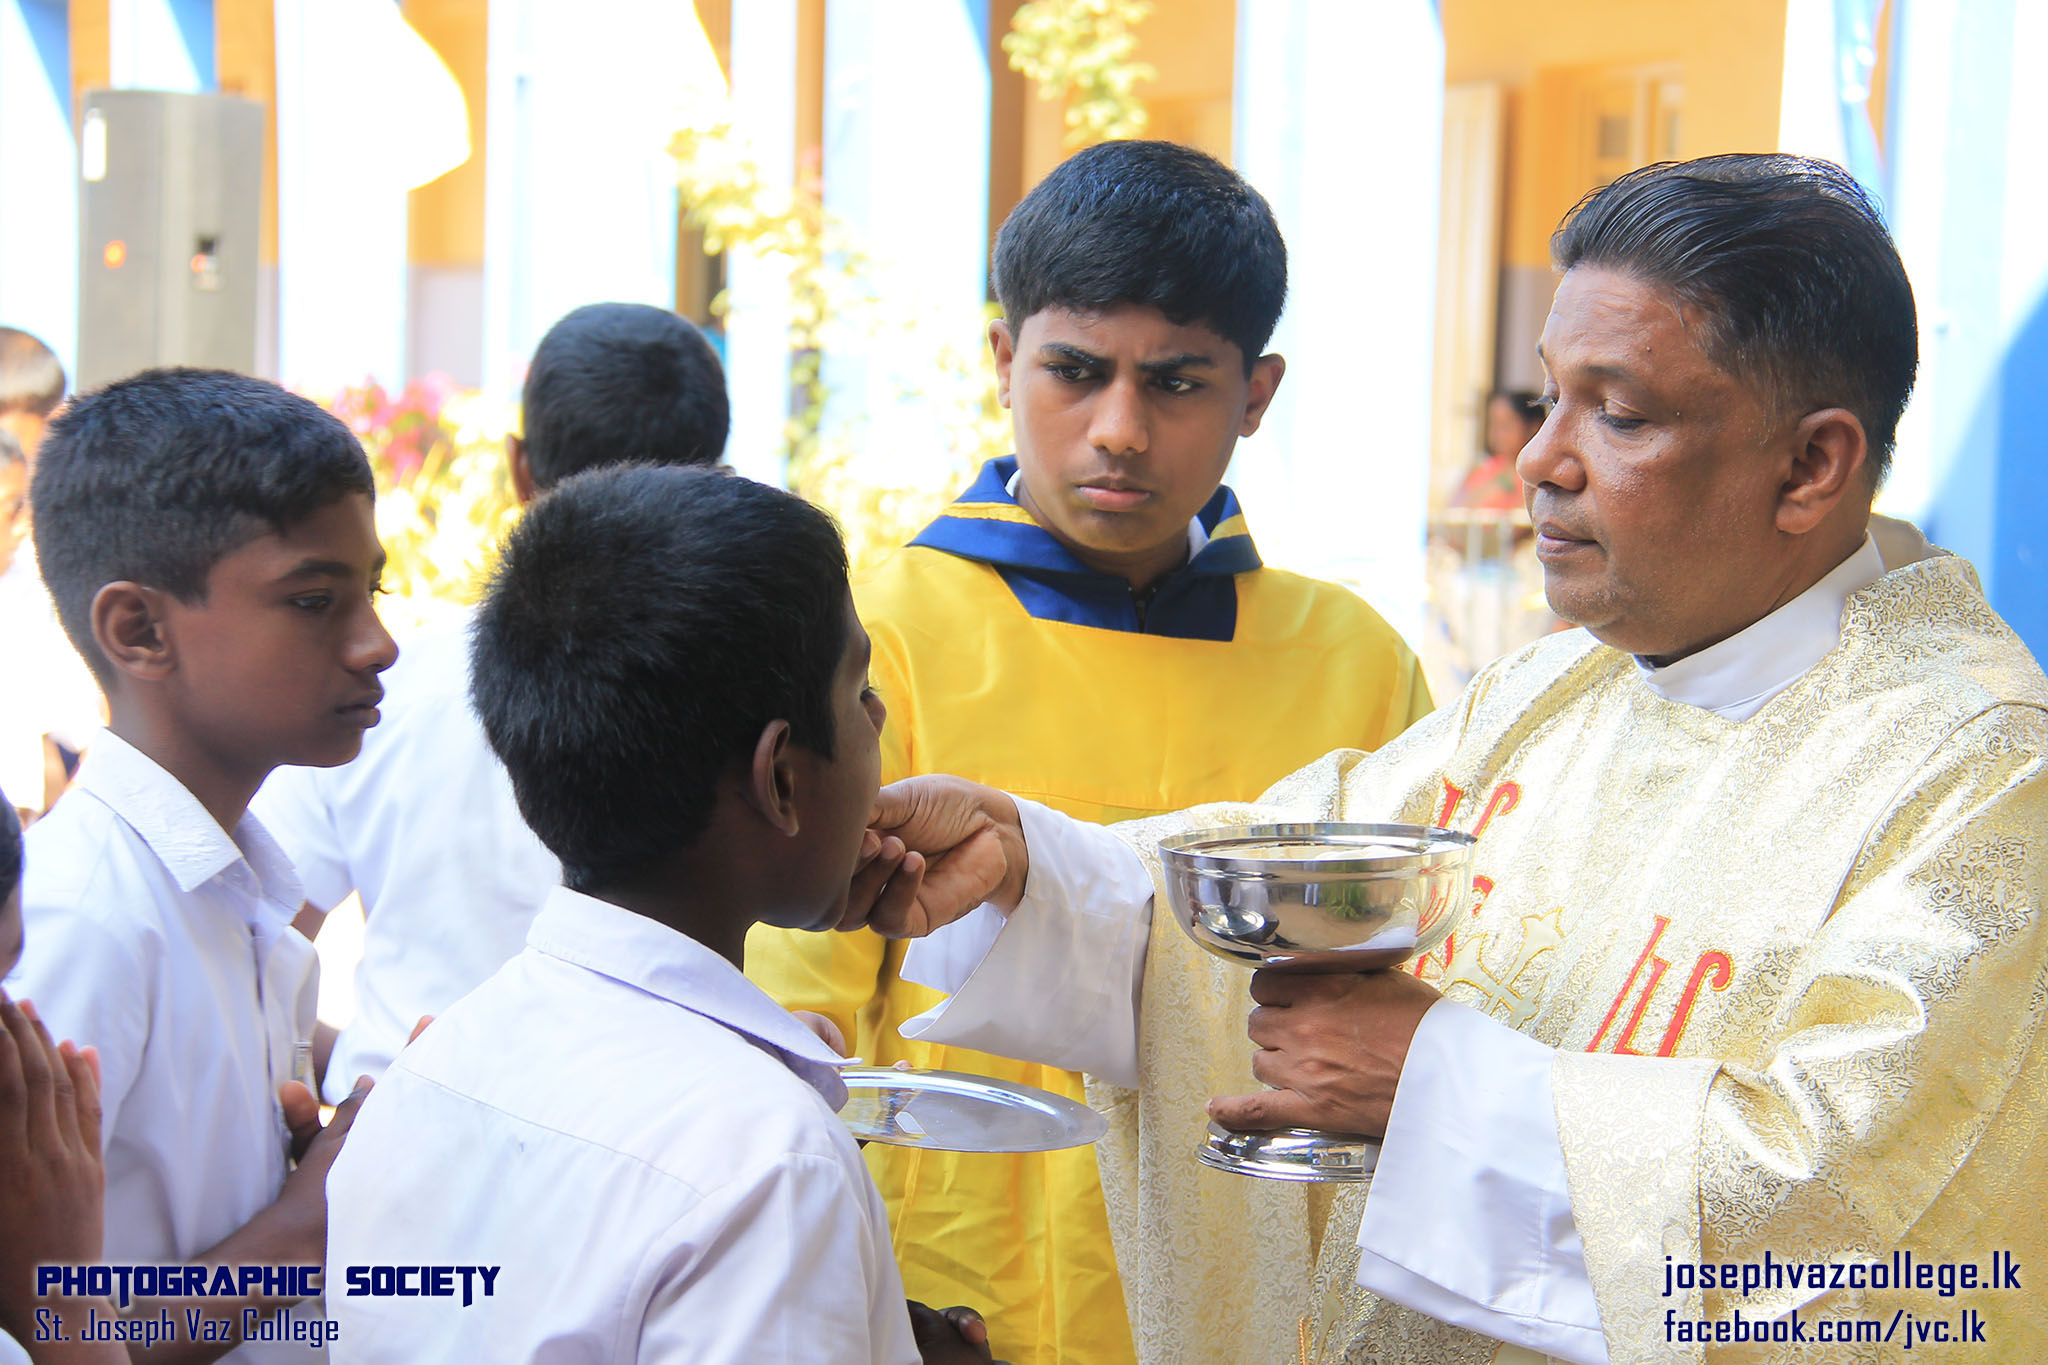 Feast Of Our Lady Fatima -2018 - St. Joseph Vaz College - Wennappuwa - Sri Lanka